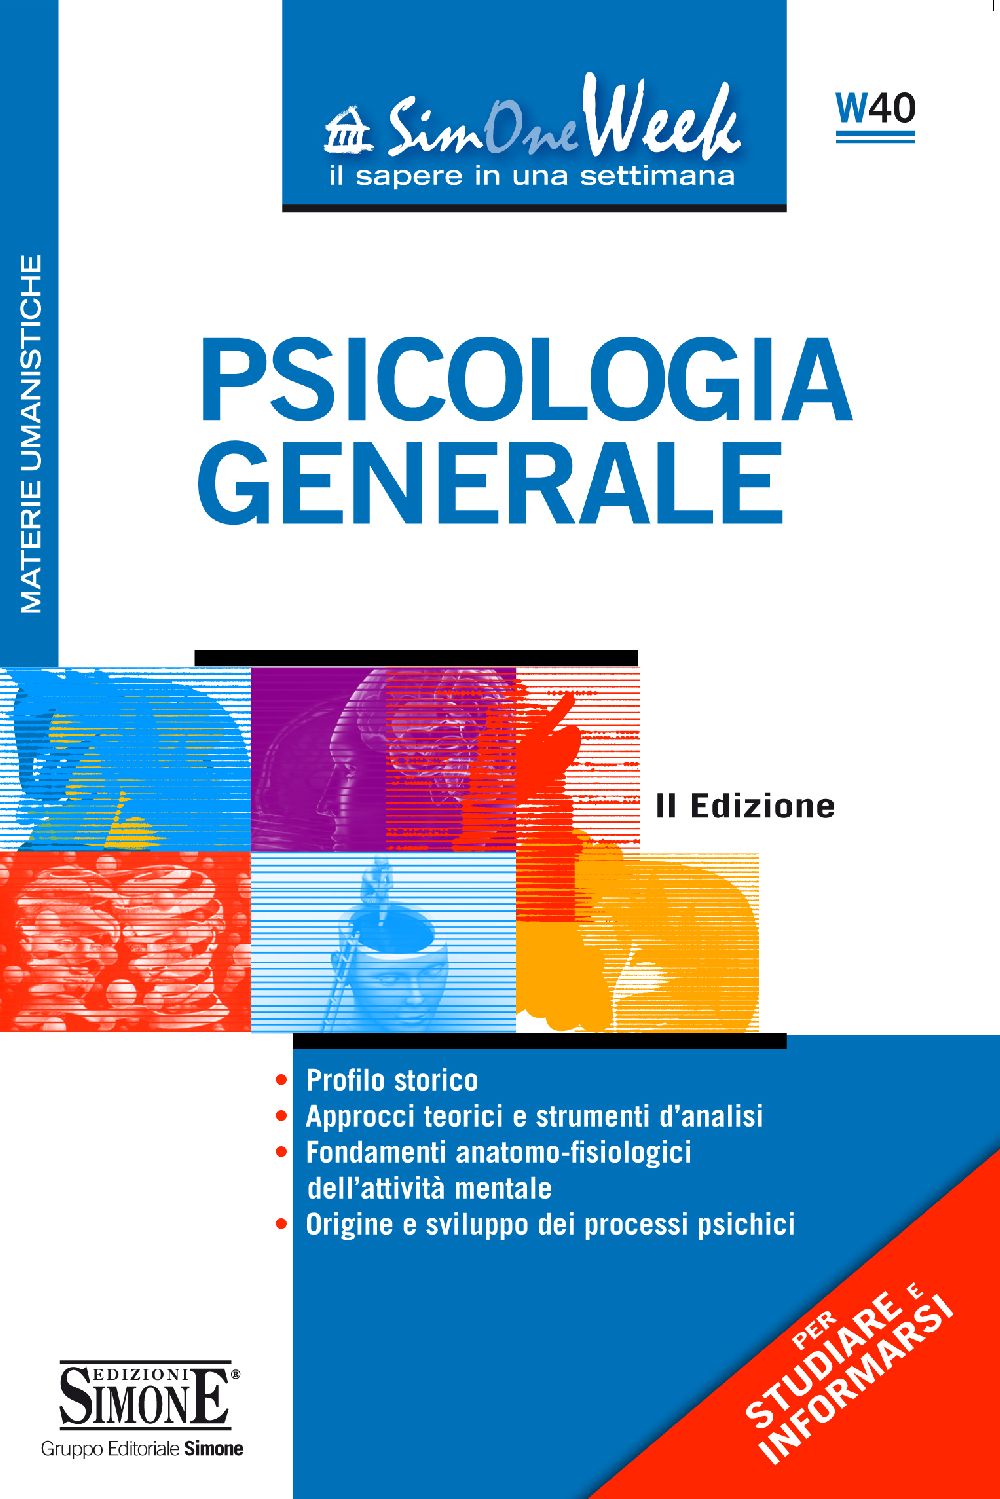 [Ebook] Psicologia generale